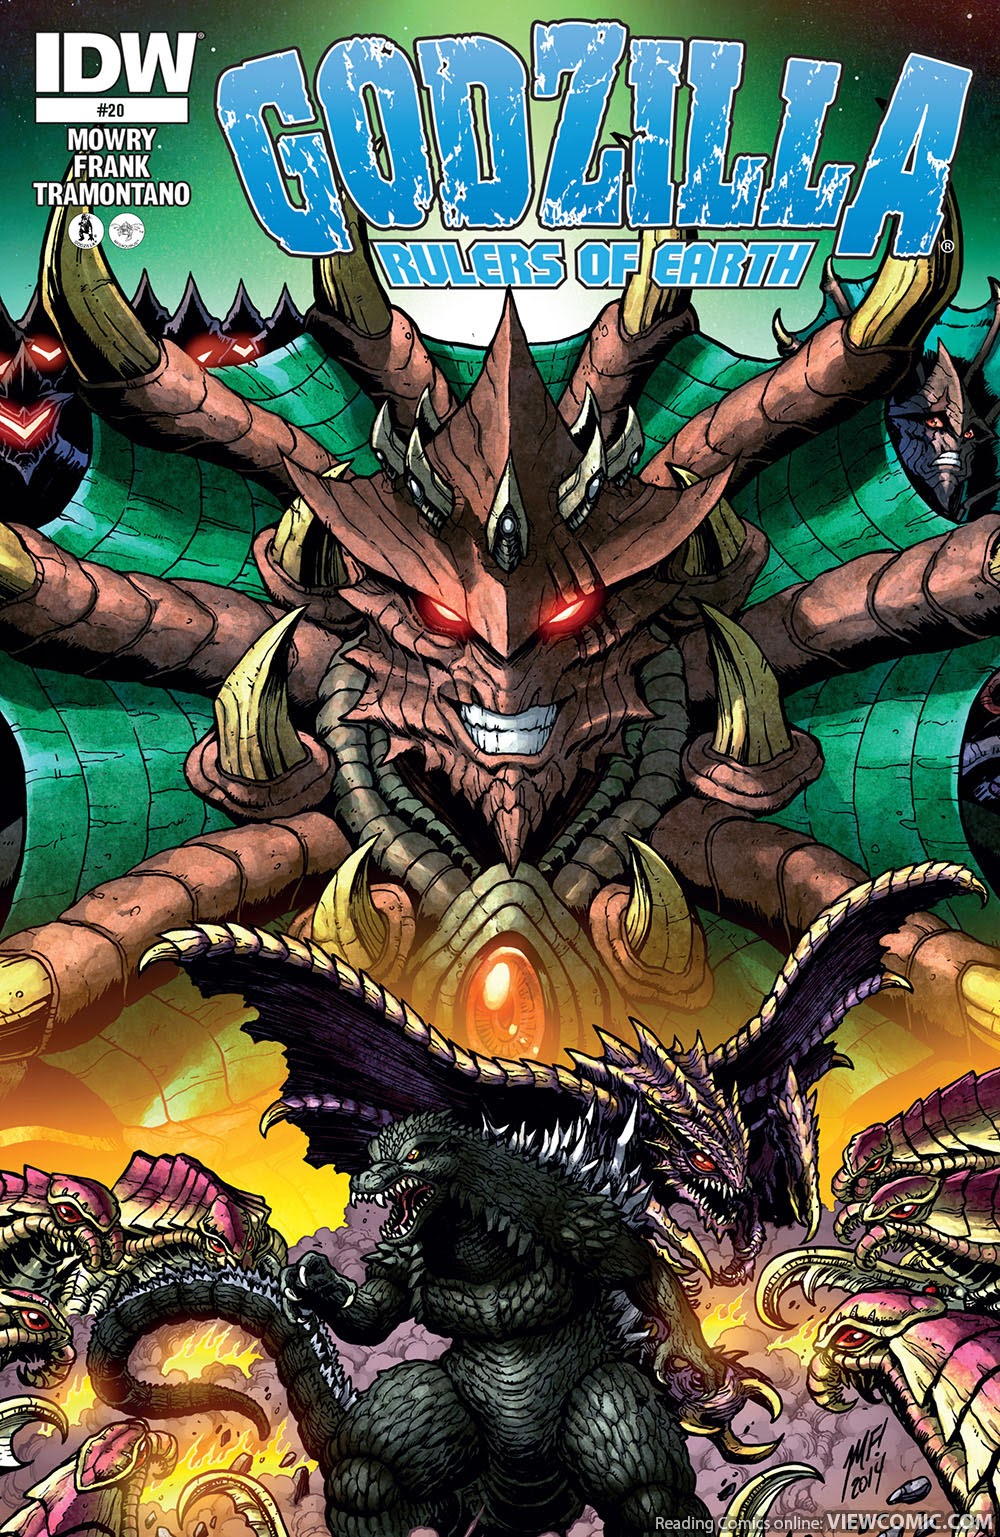 High Resolution Wallpaper | Godzilla: Rulers Of Earth 1000x1537 px